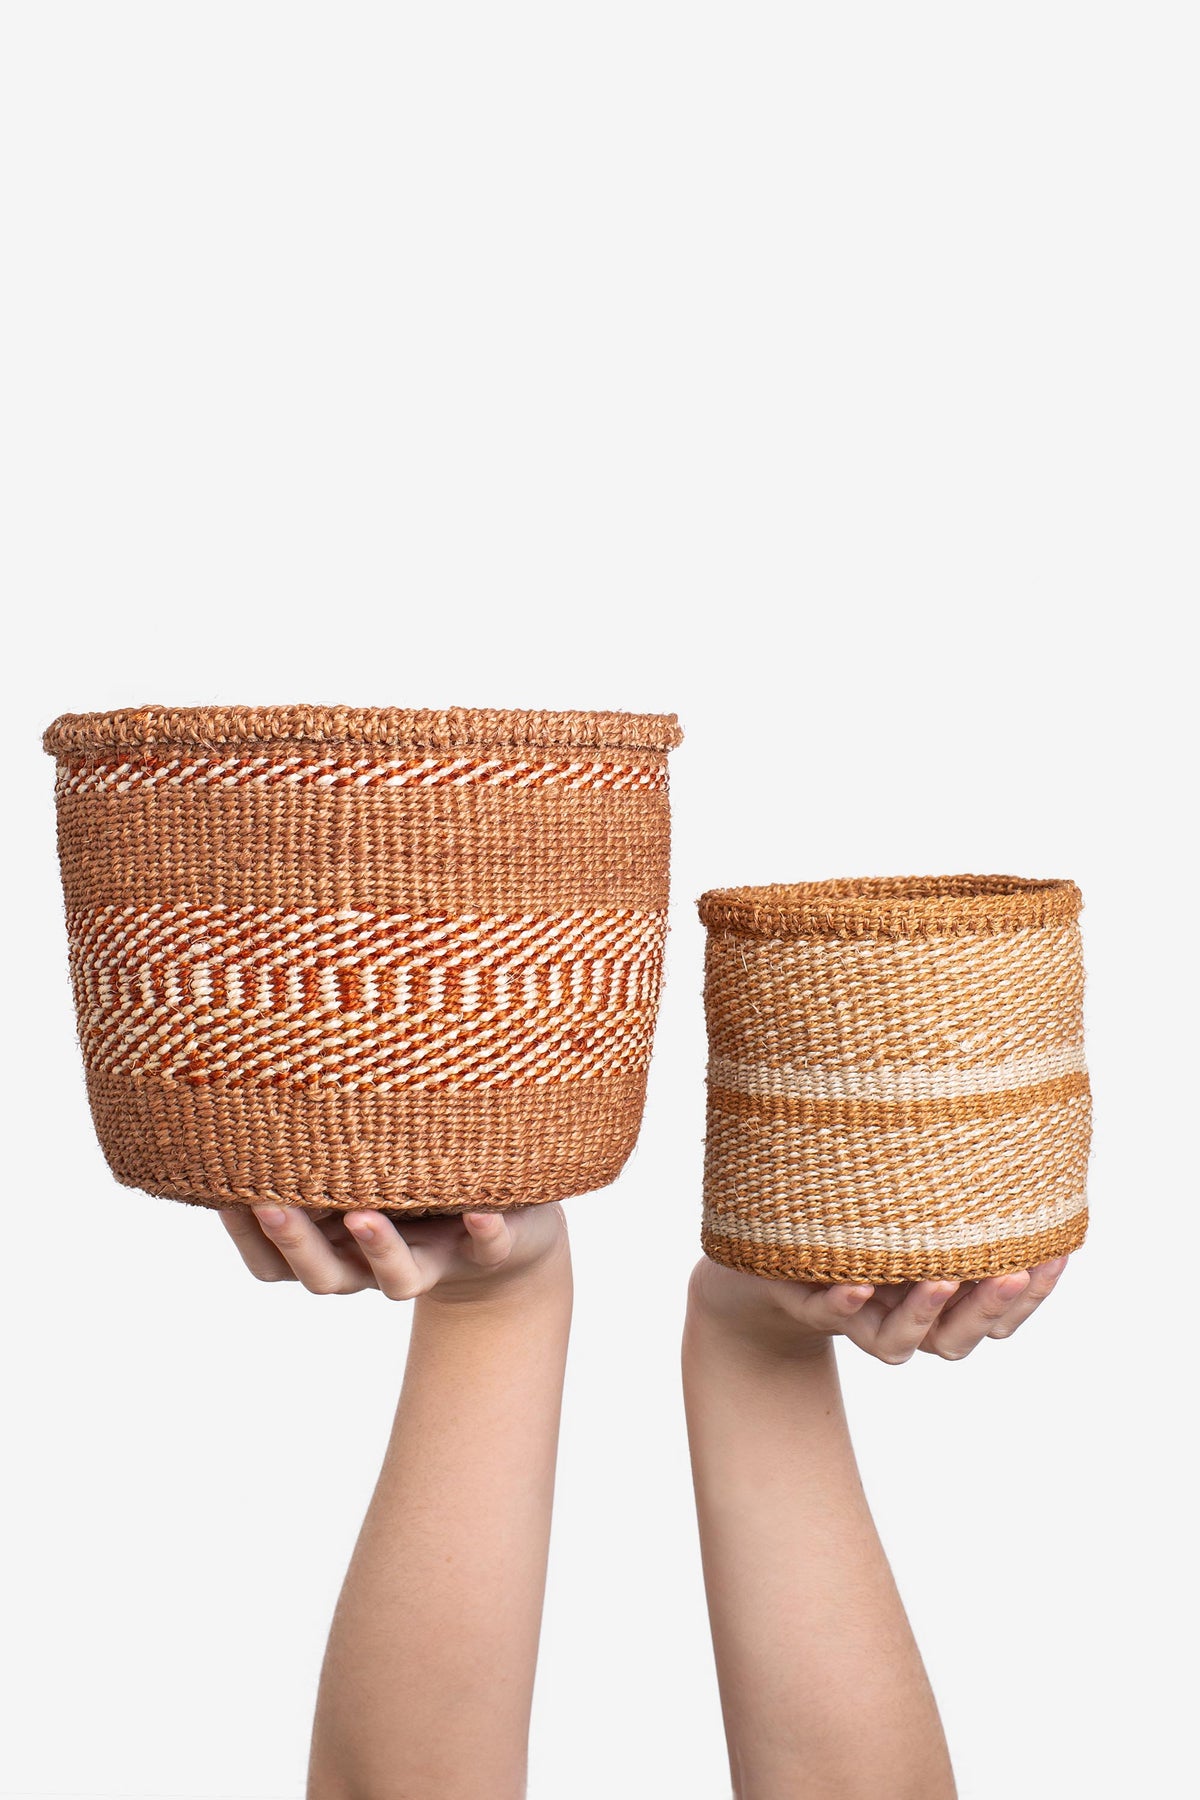 Woven Sisal Storage Basket - Small (Pair)